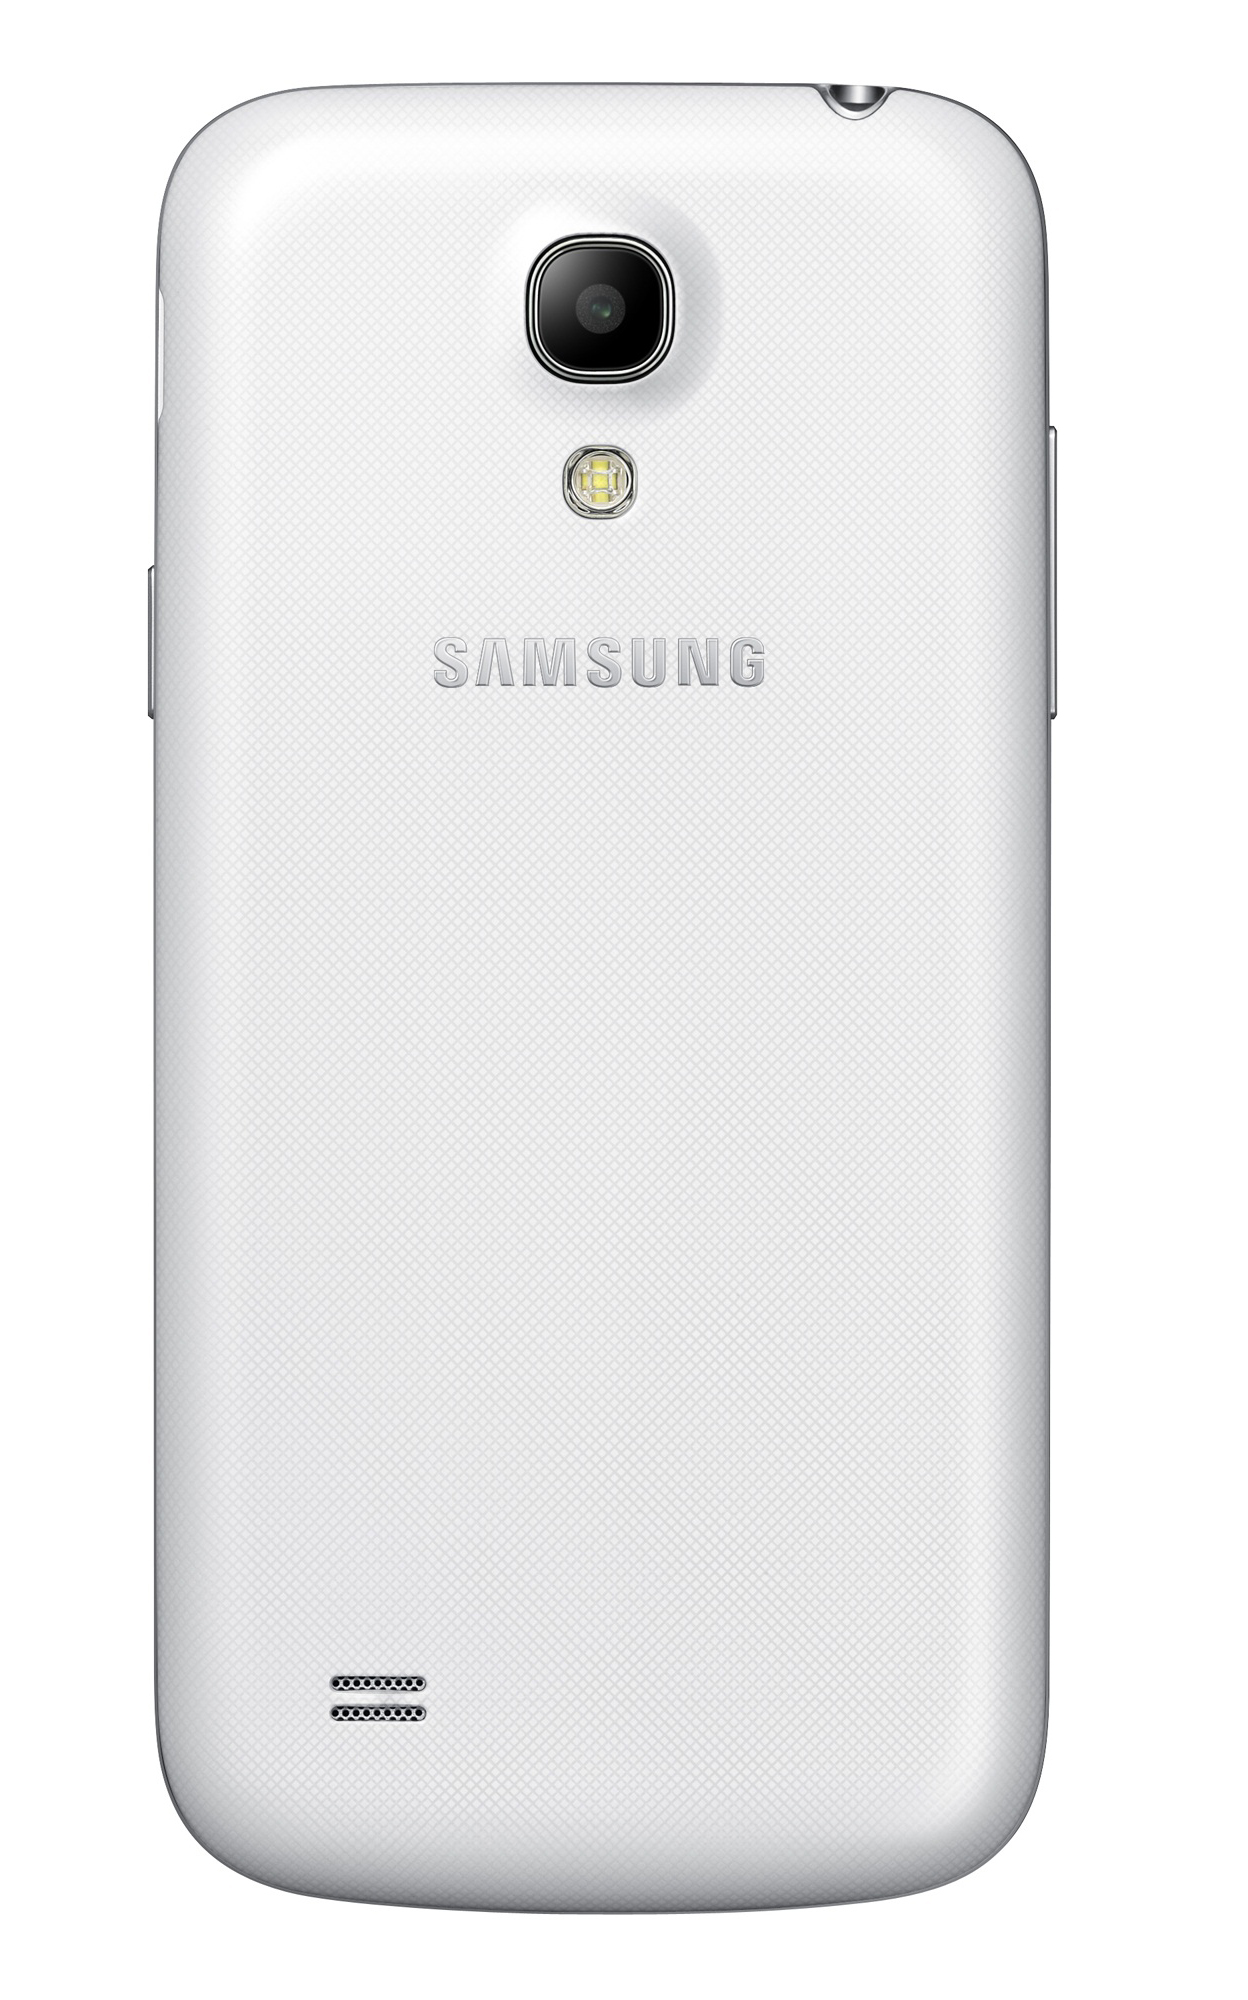 Galaxy S4 Mini Review